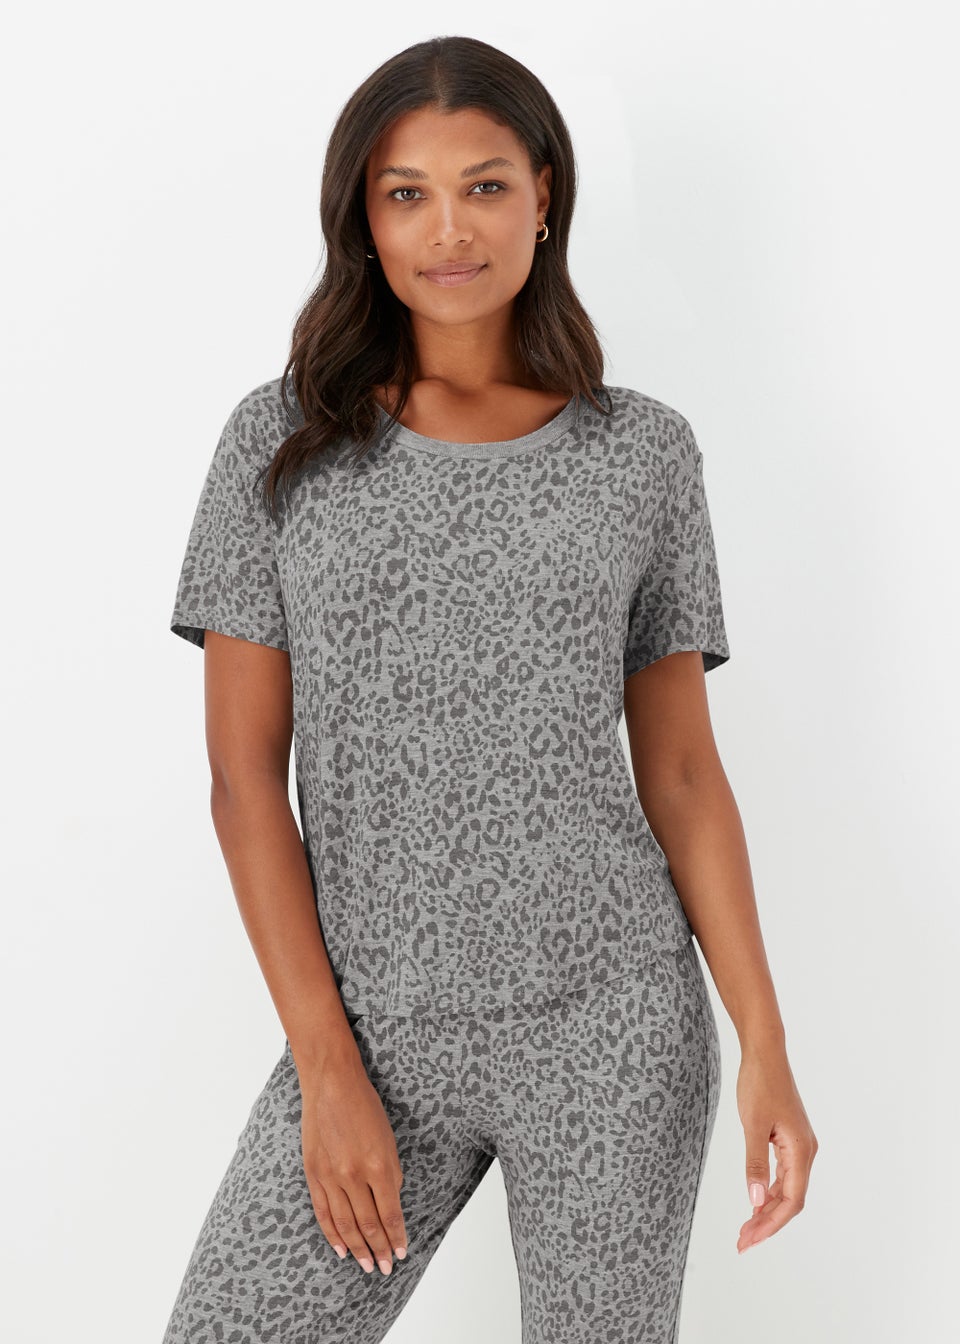 Grey Marl Animal Print Pyjama Top